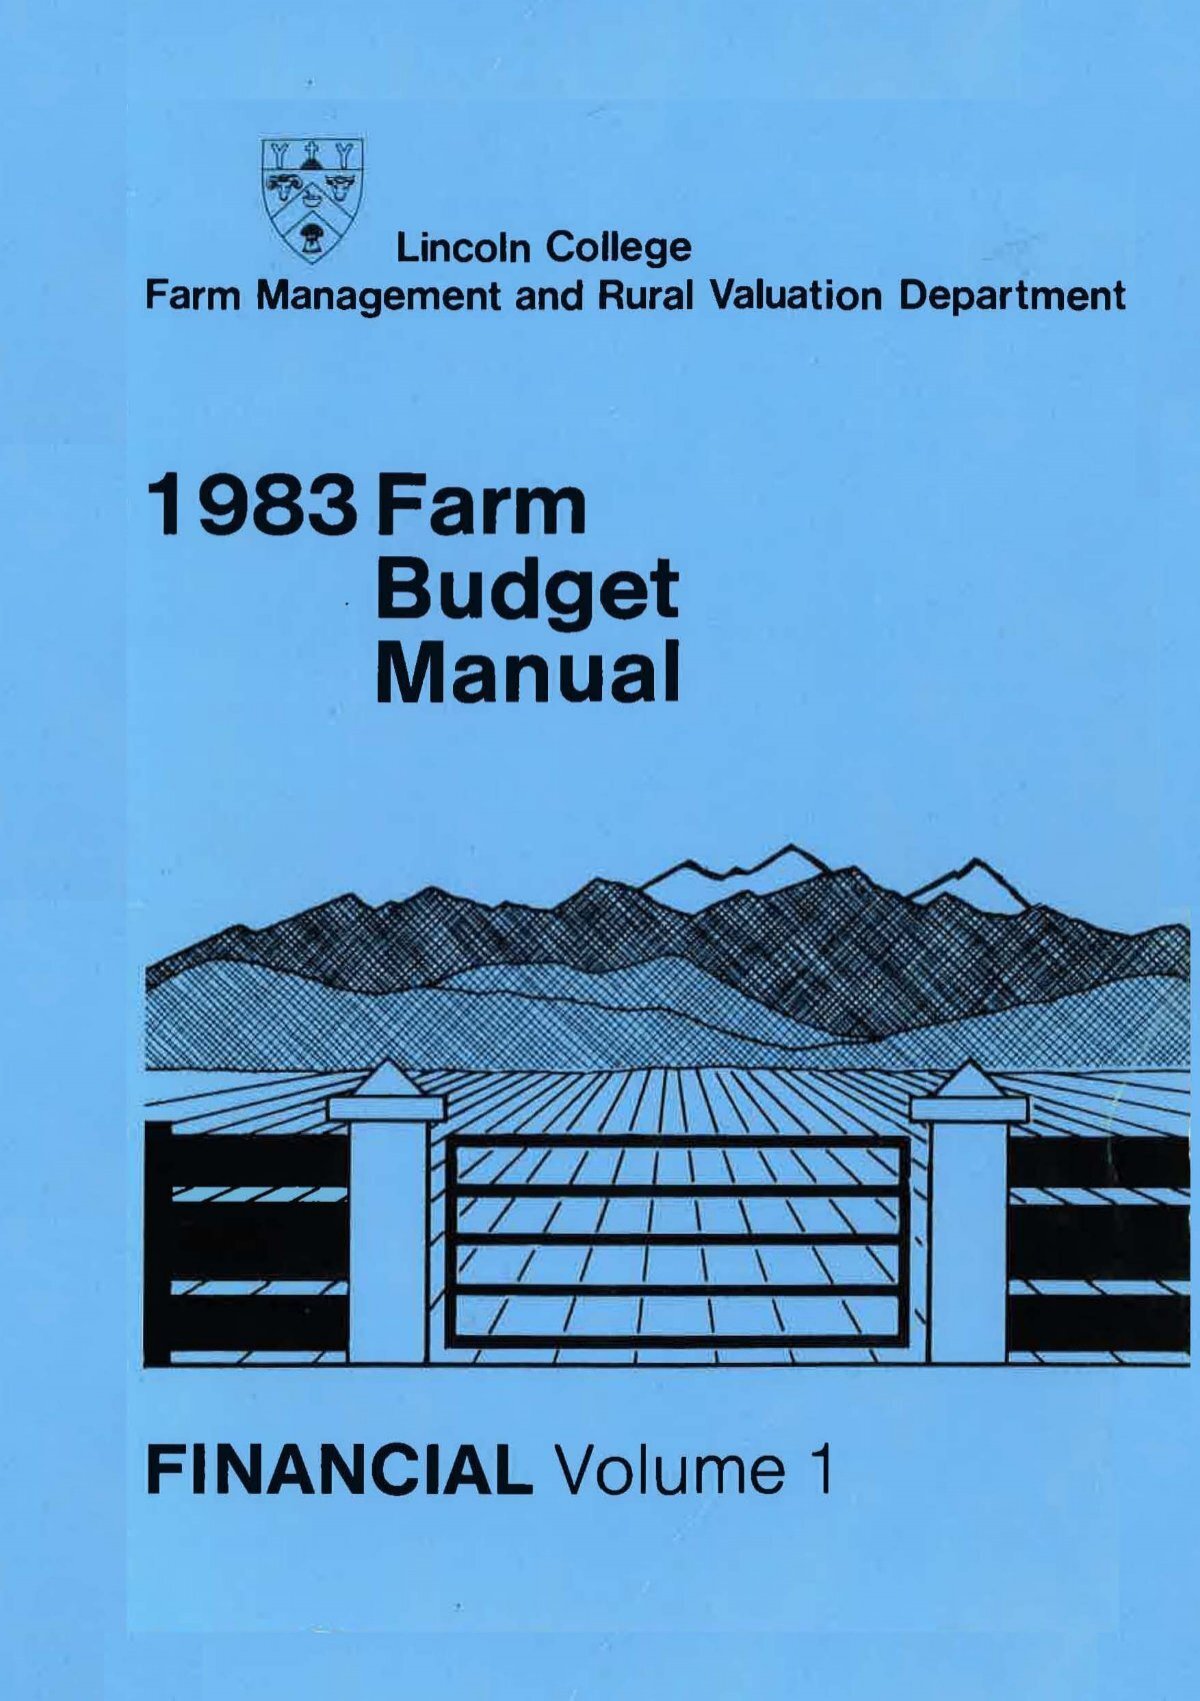 Farm budget manual 1983 financial volume 1 - Lincoln University